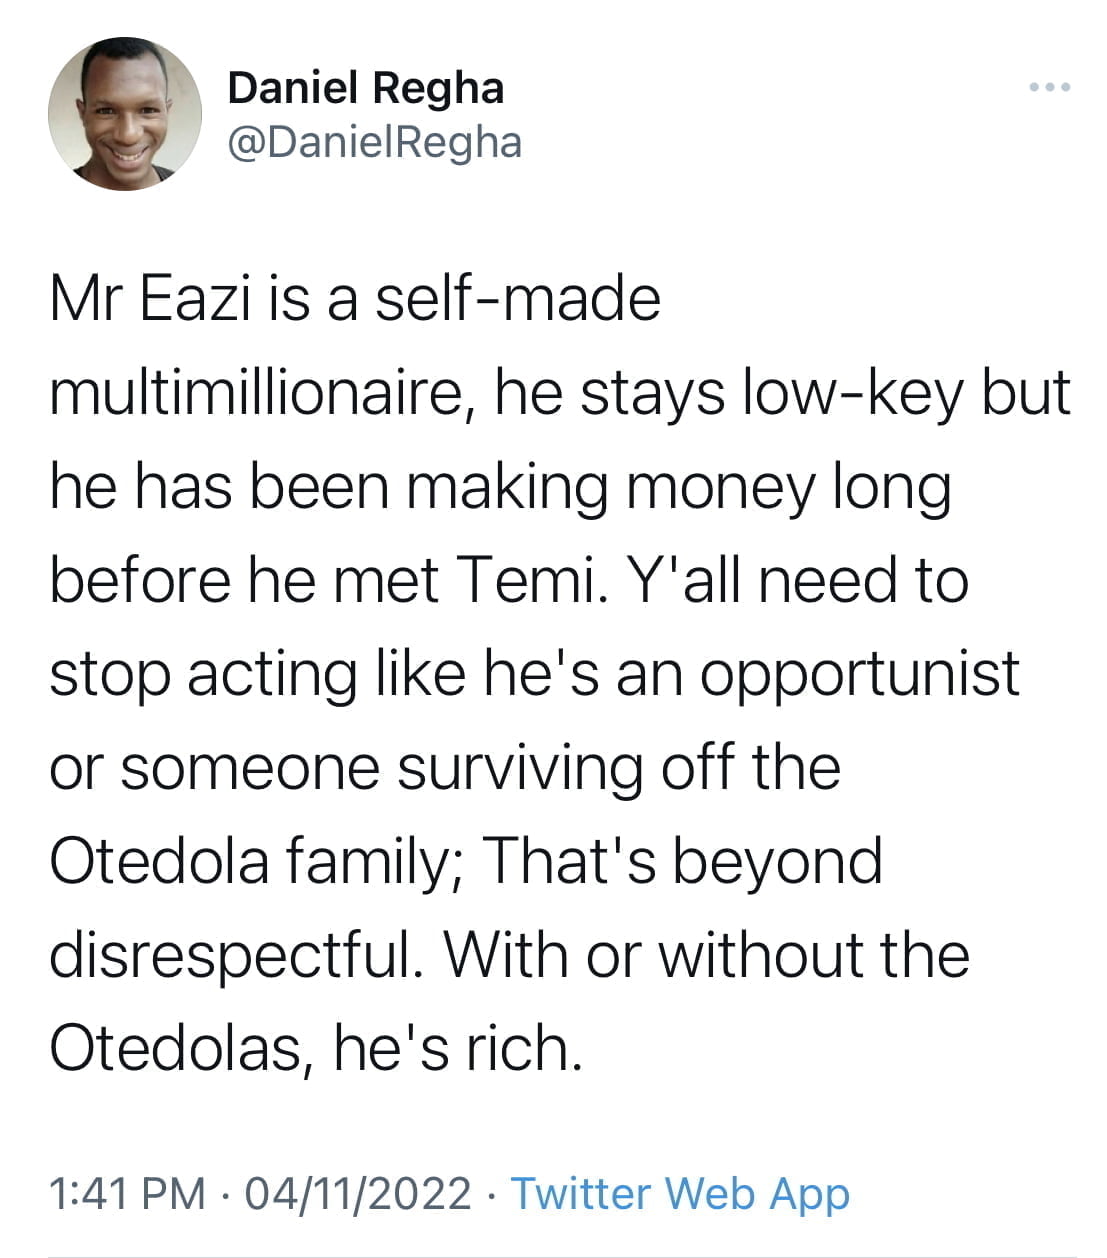 Mr Eazi is not a Gold Digger, He loves Otedola’s daughter - Daniel Regha Knocks those criticizing him